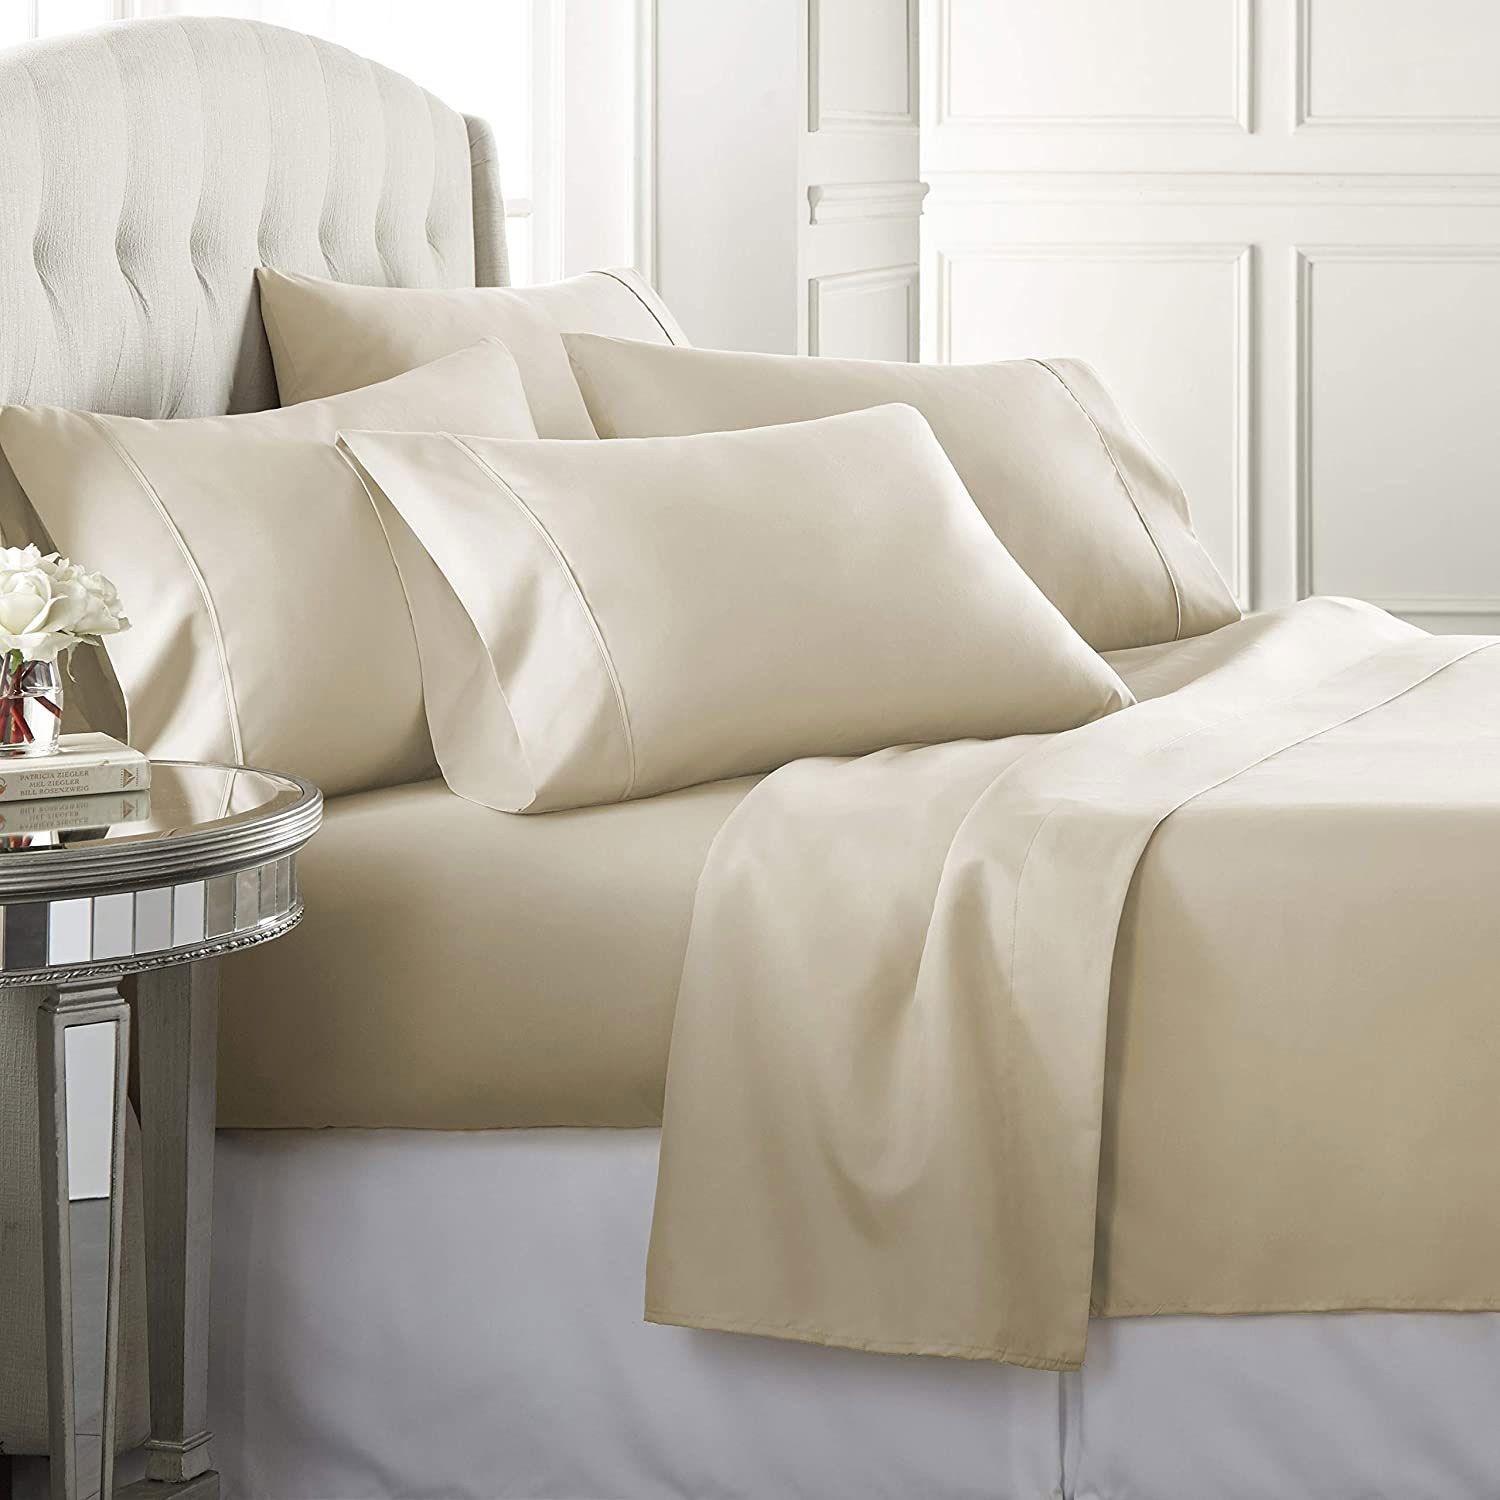 6 Piece Hotel Luxury Soft 1800 Series Premium Bed Sheets Set